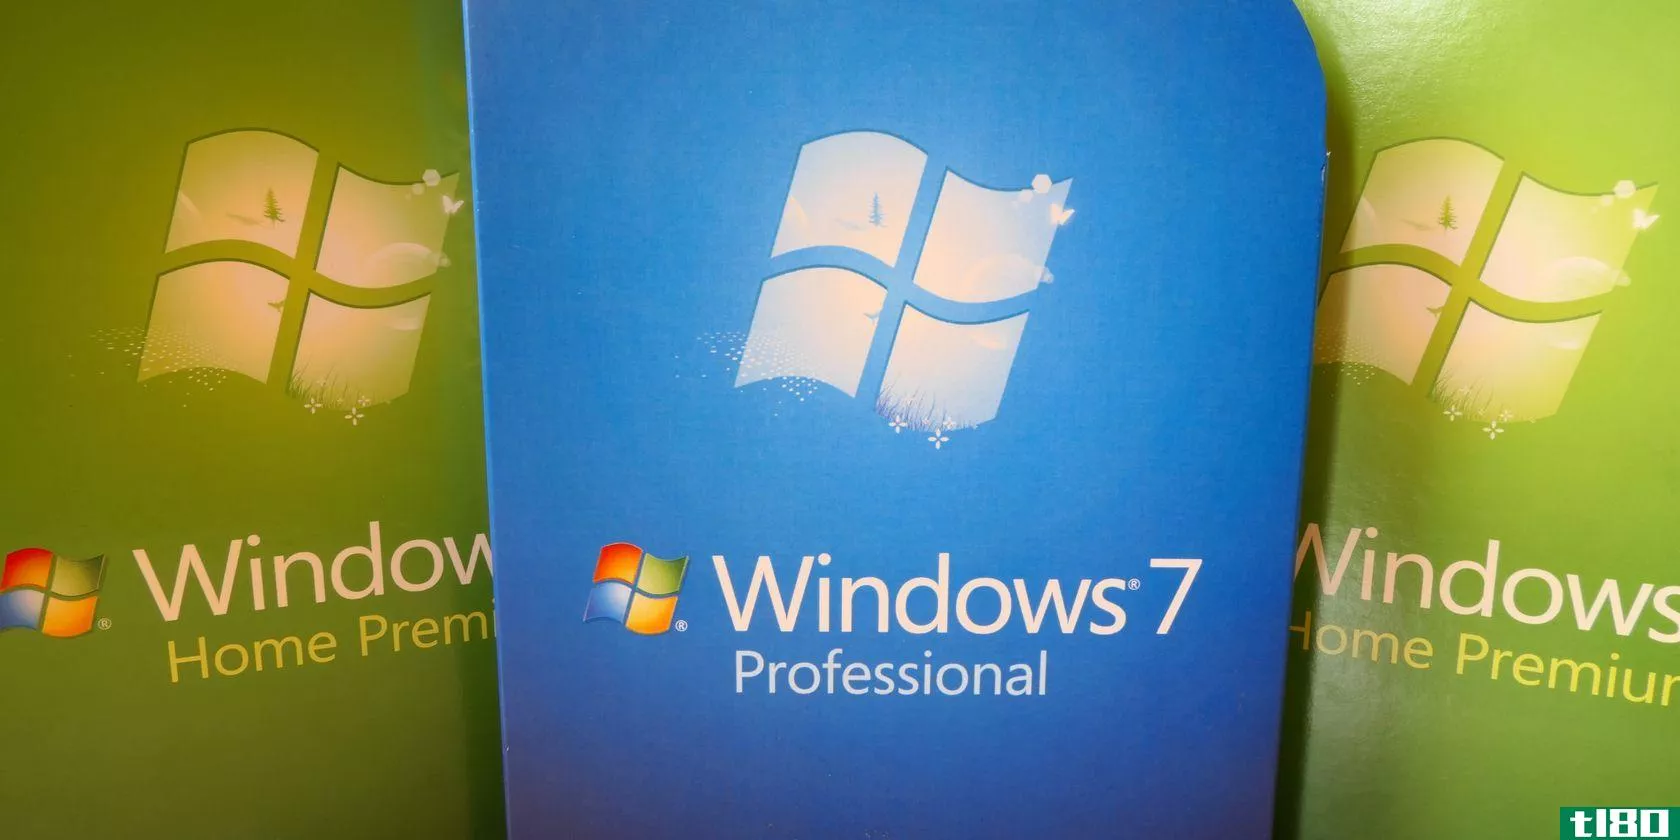 Copies of Windows 7